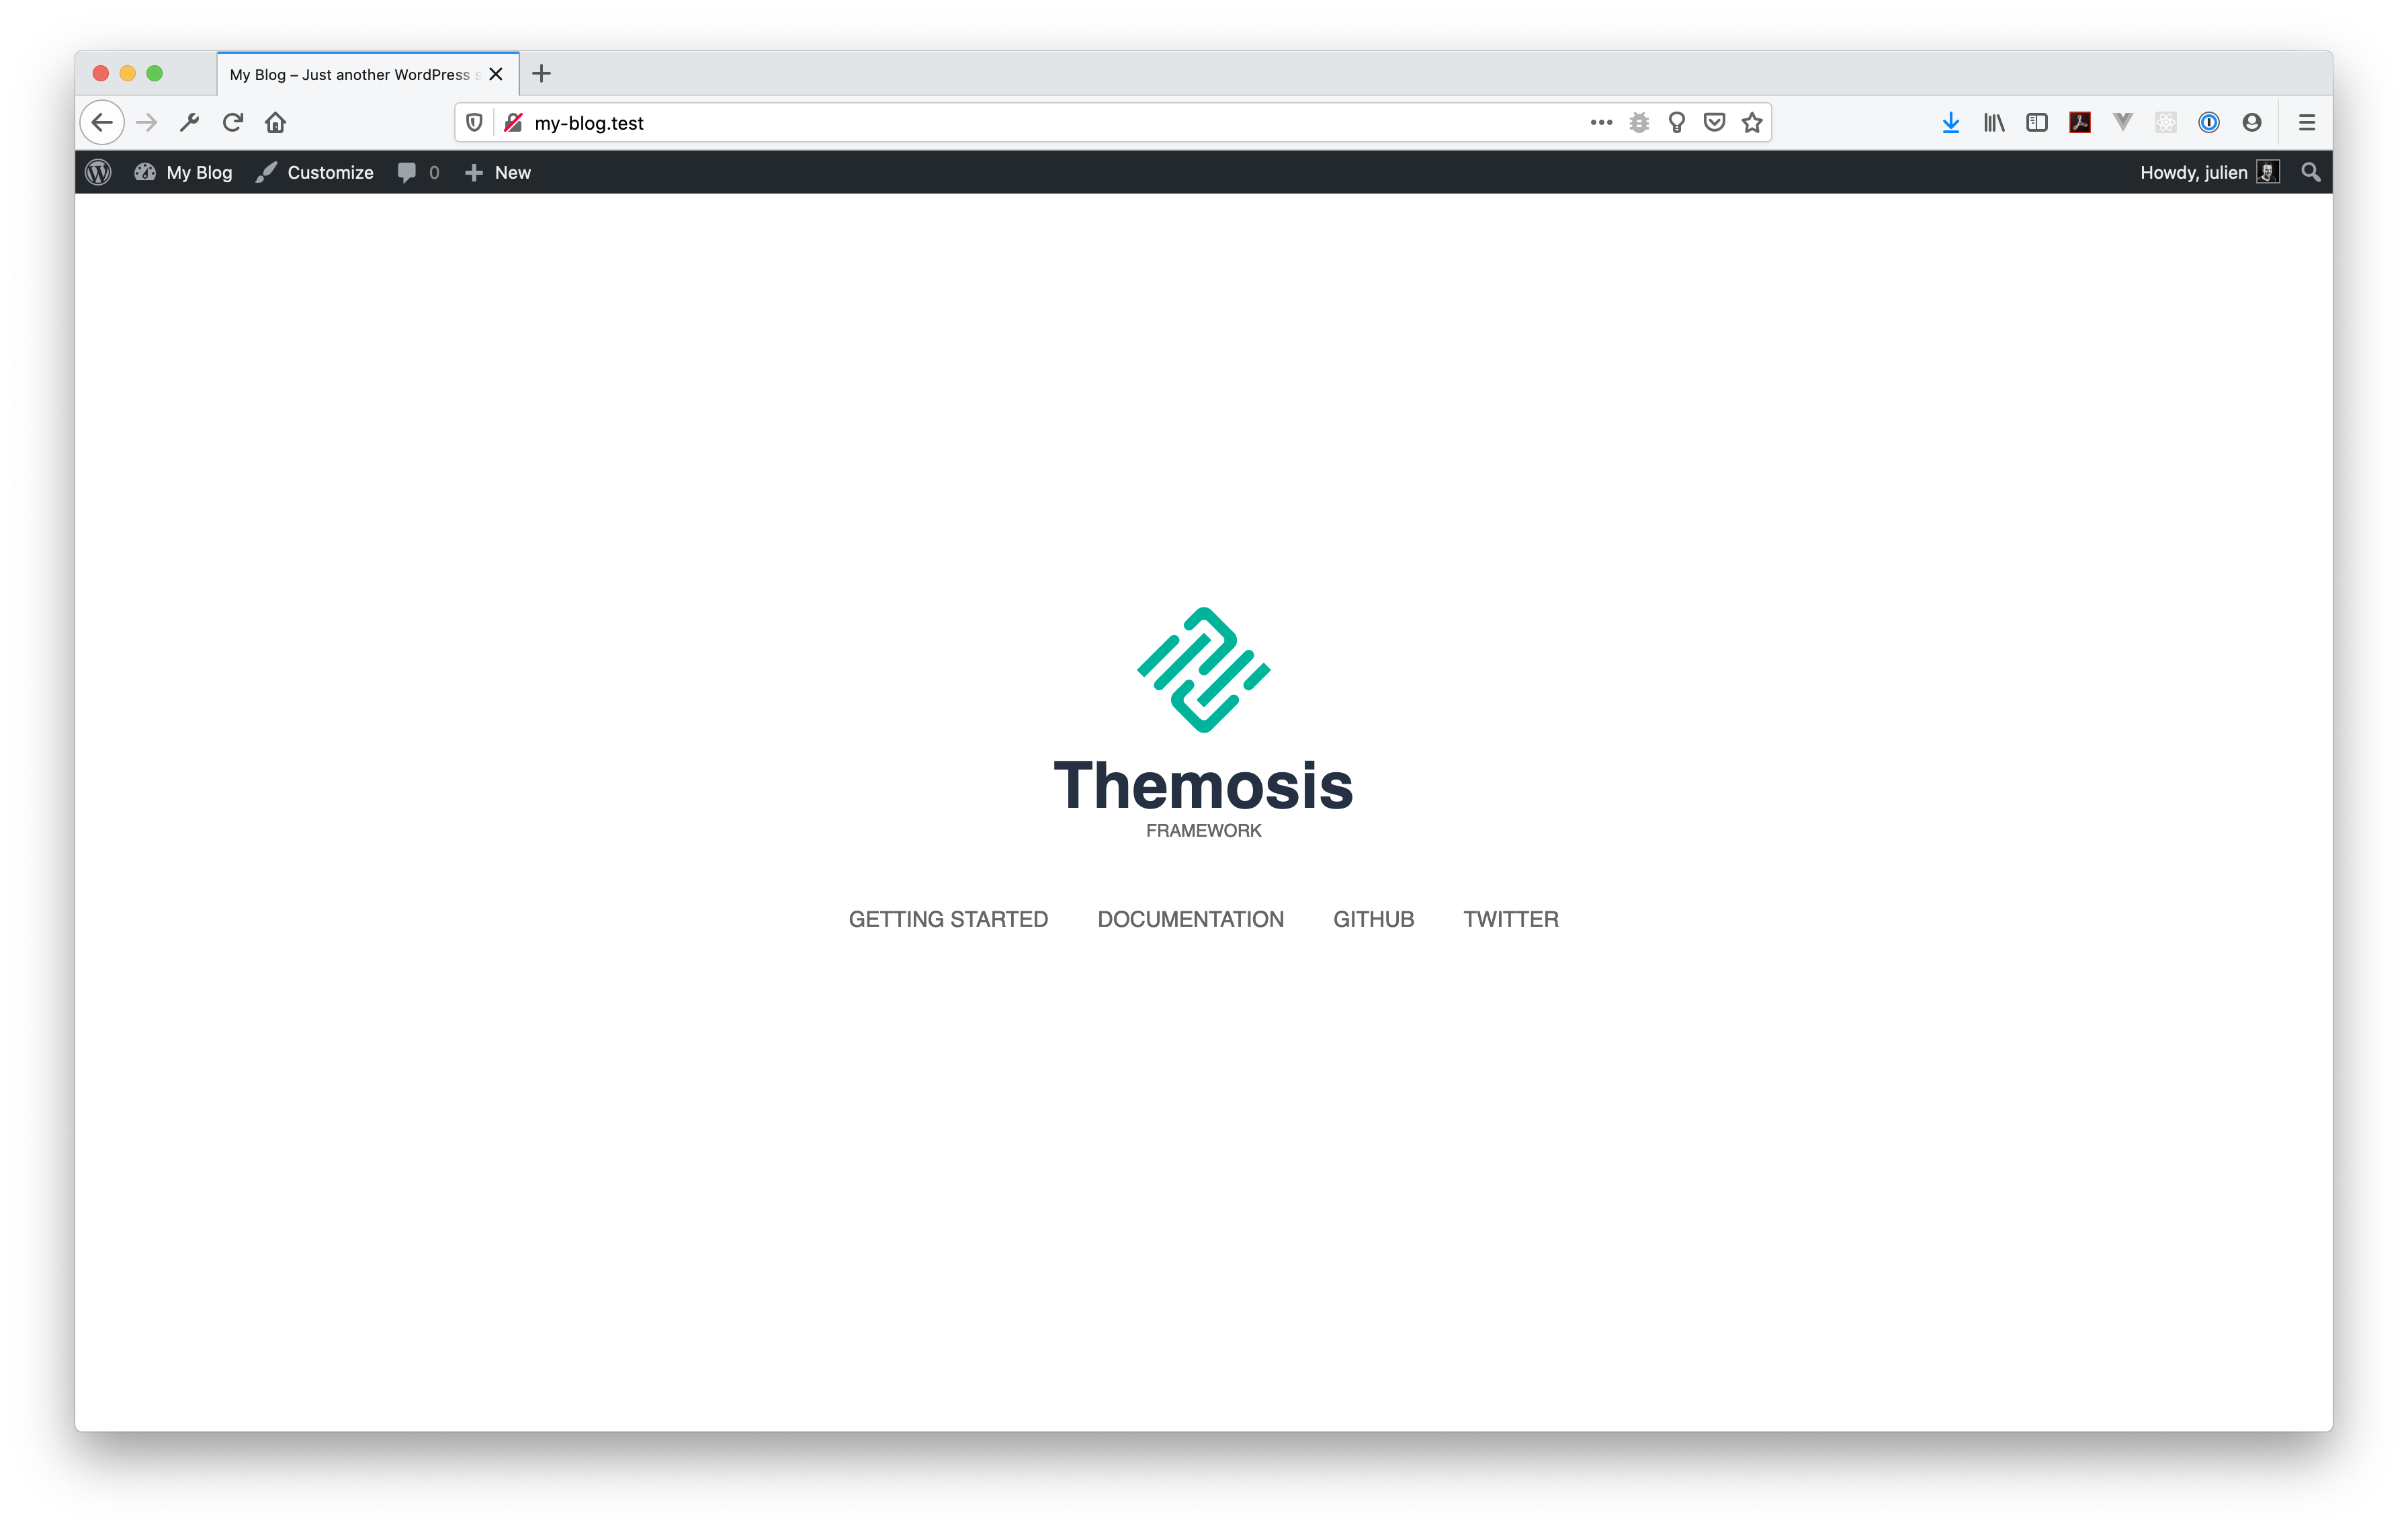 My Blog - Themosis framework welcome screen.